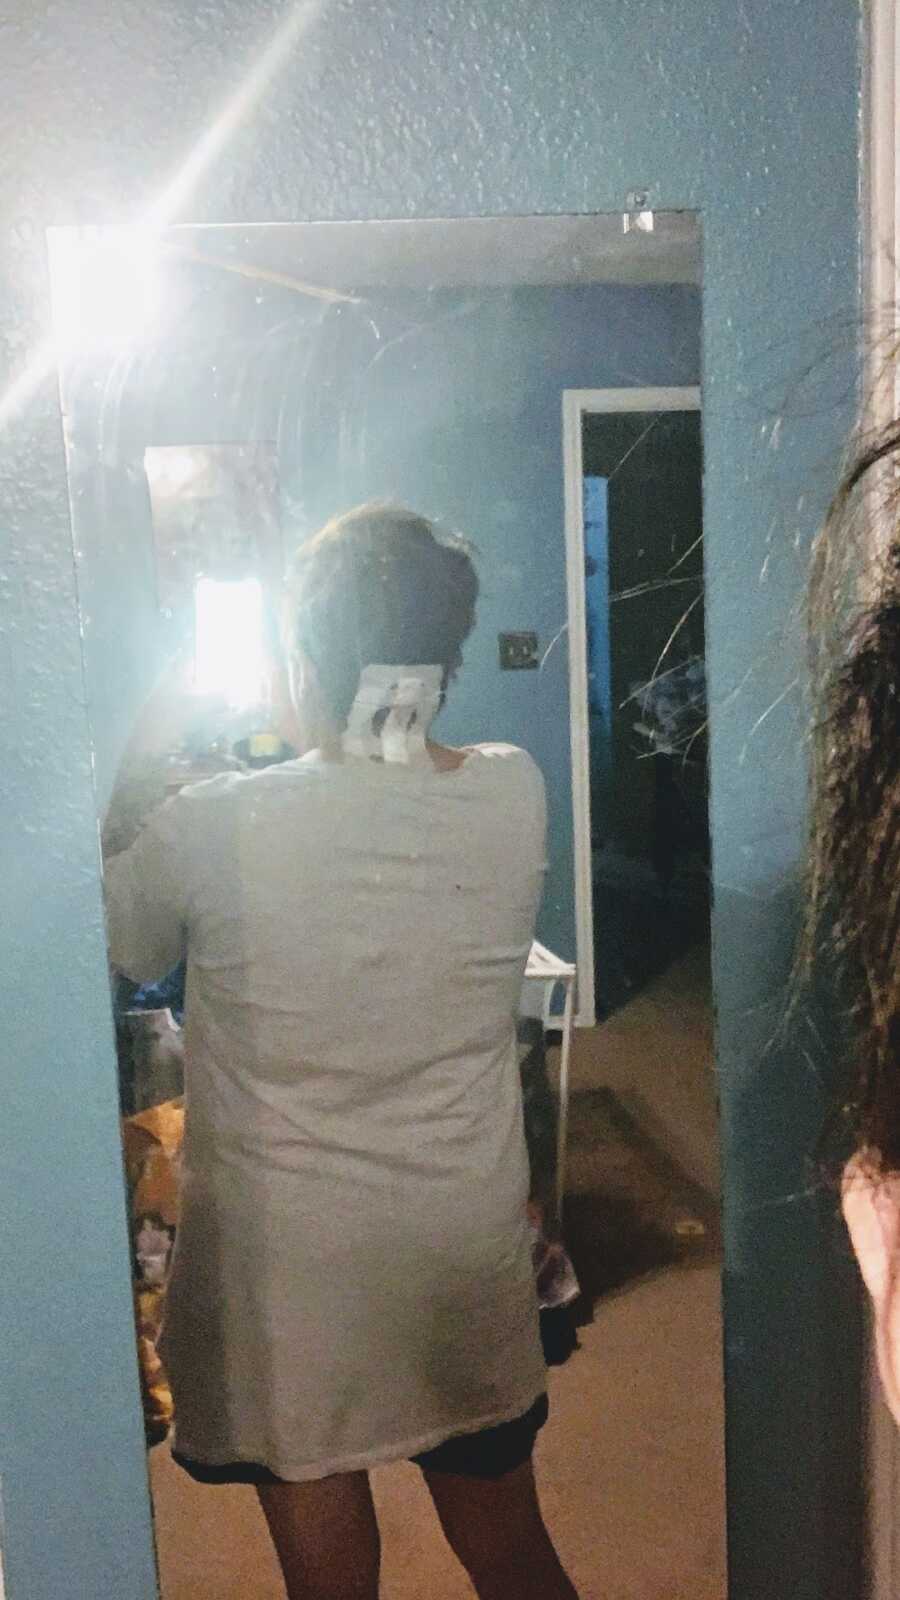 Woman takes mirror selfie post surgery